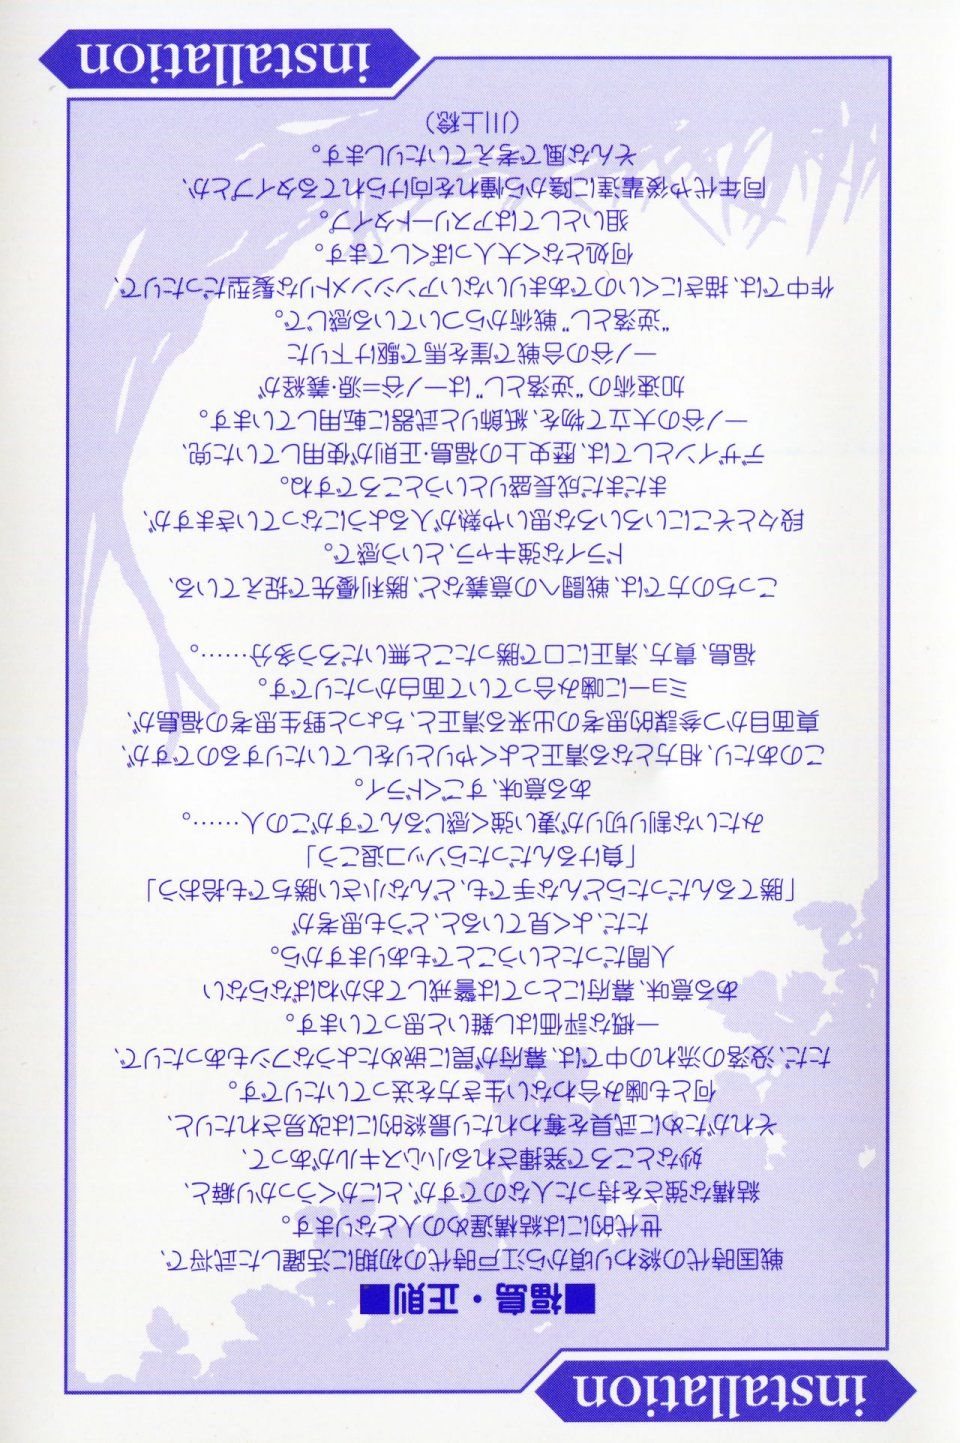 Kyoukai Senjou no Horizon LN Vol 15(6C) Part 1 - Photo #4